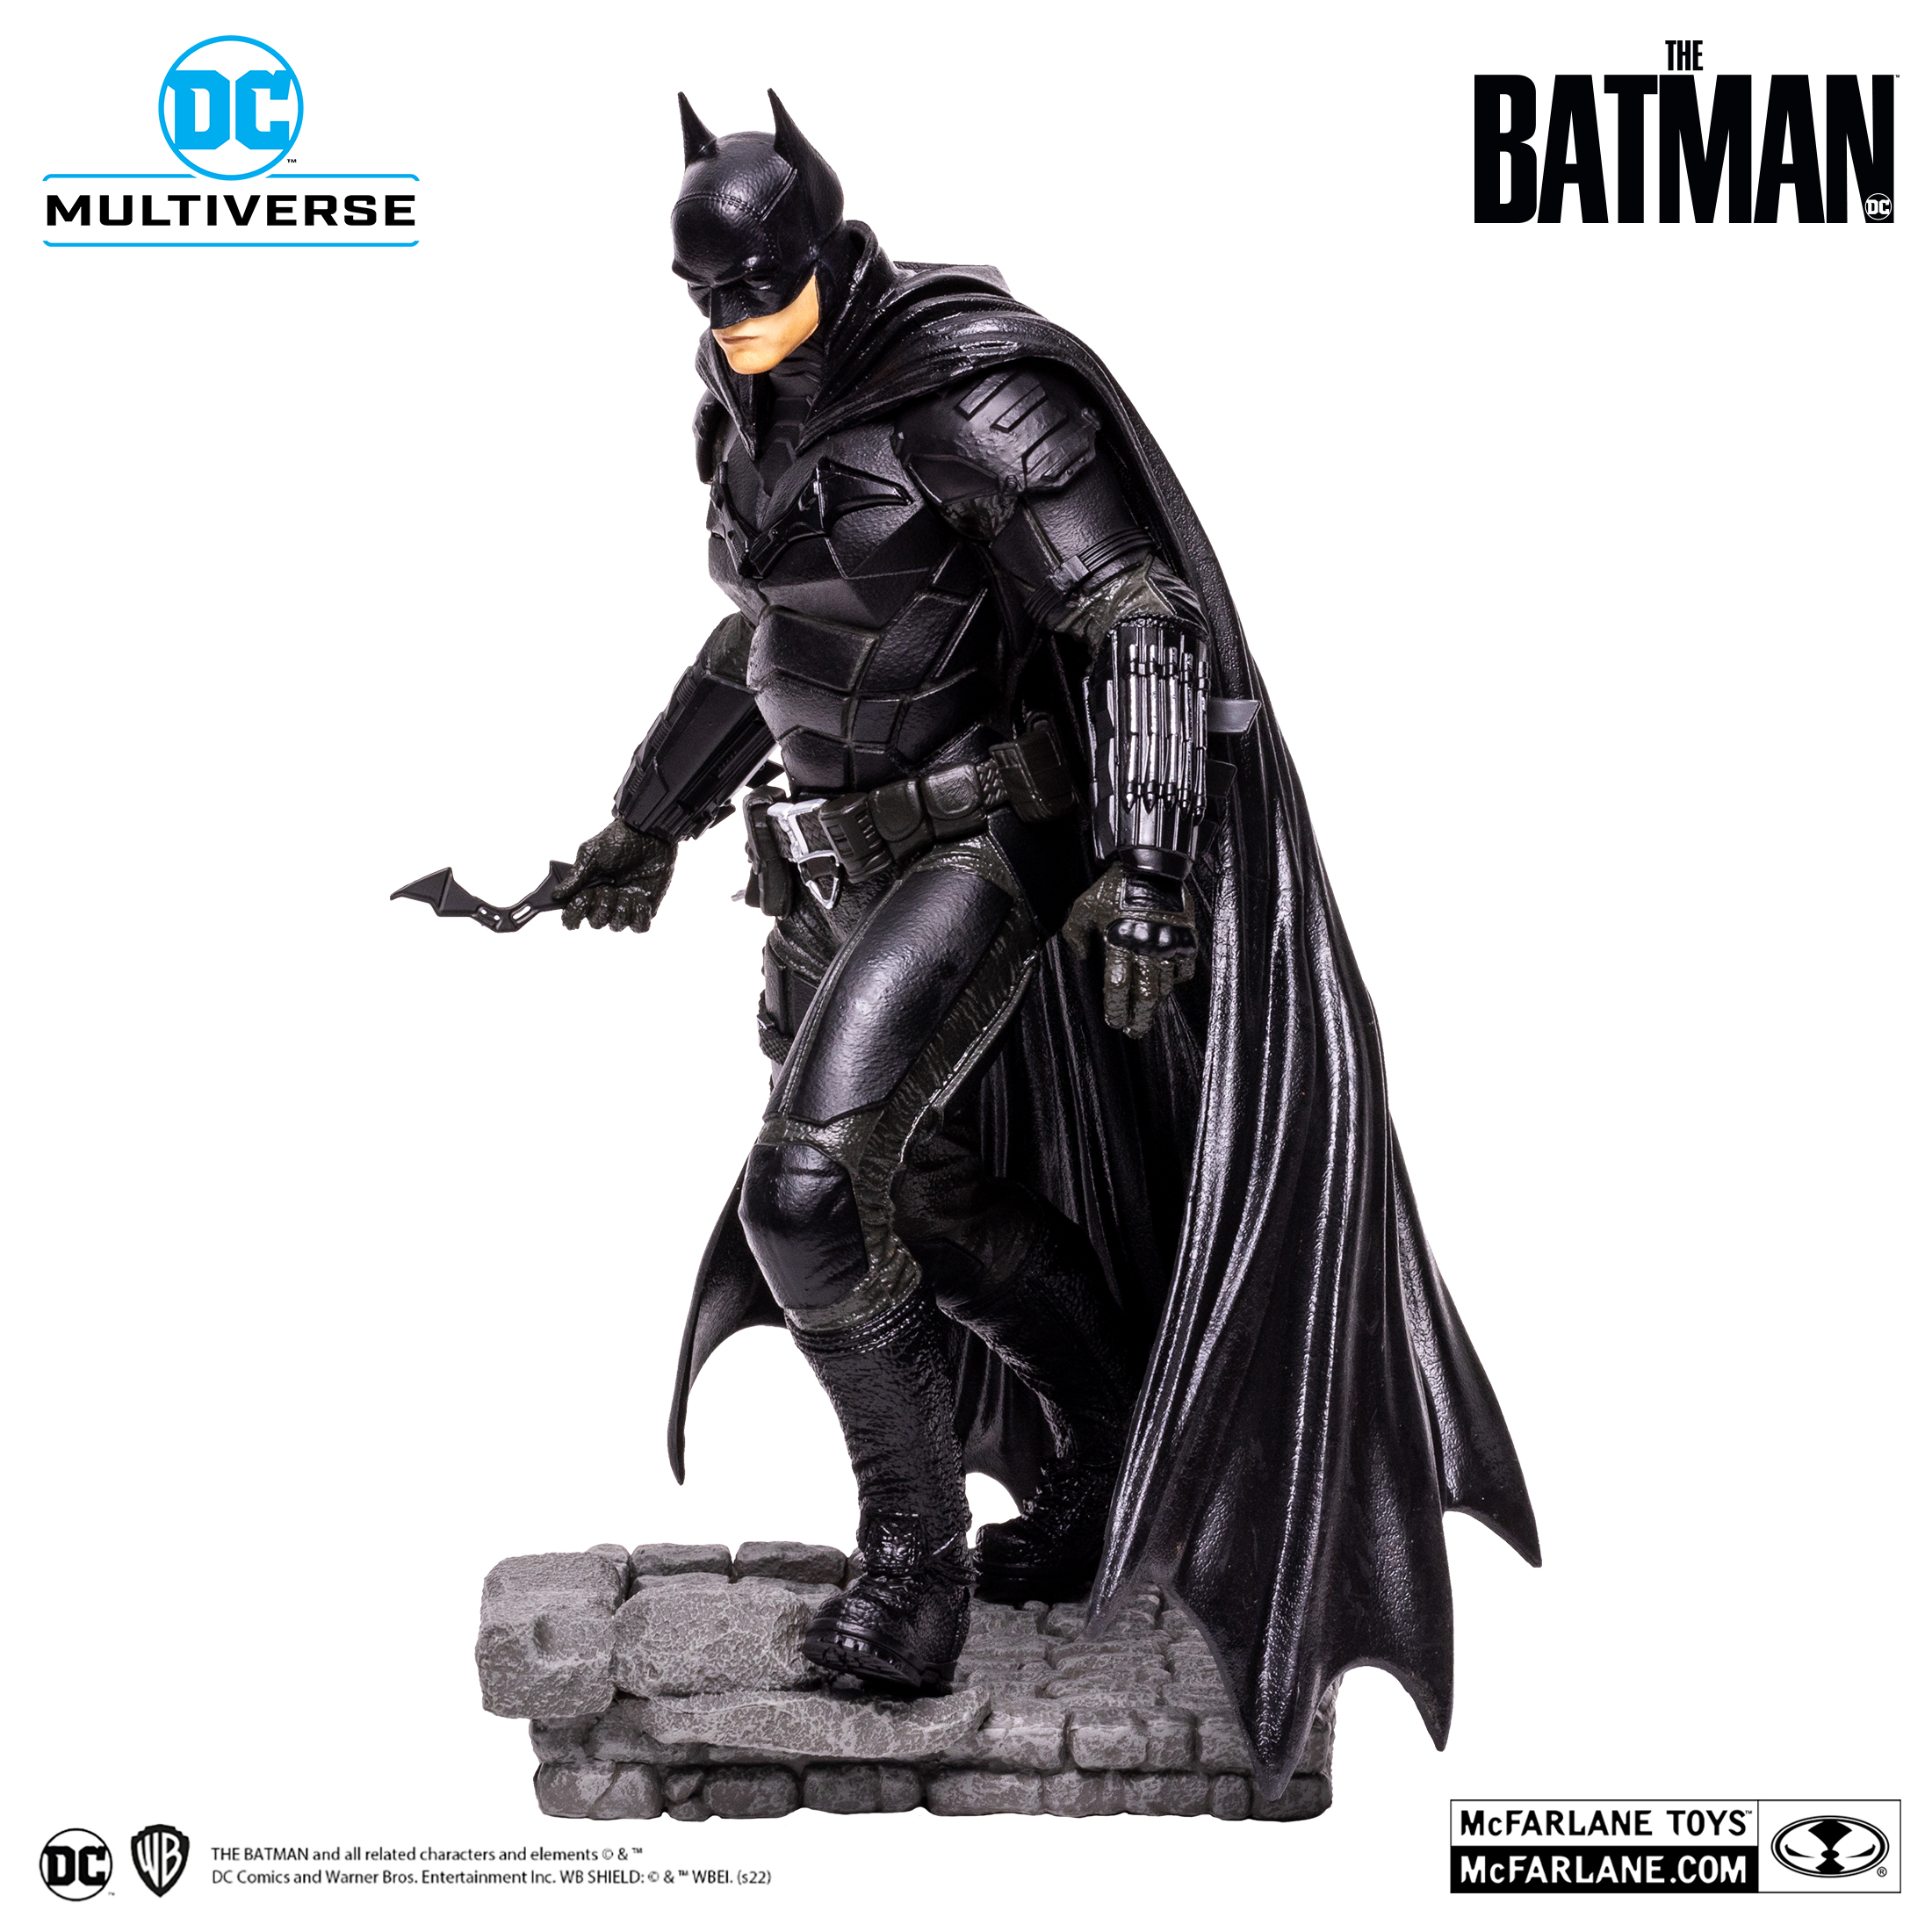 The Batman 12″ Posed Statue